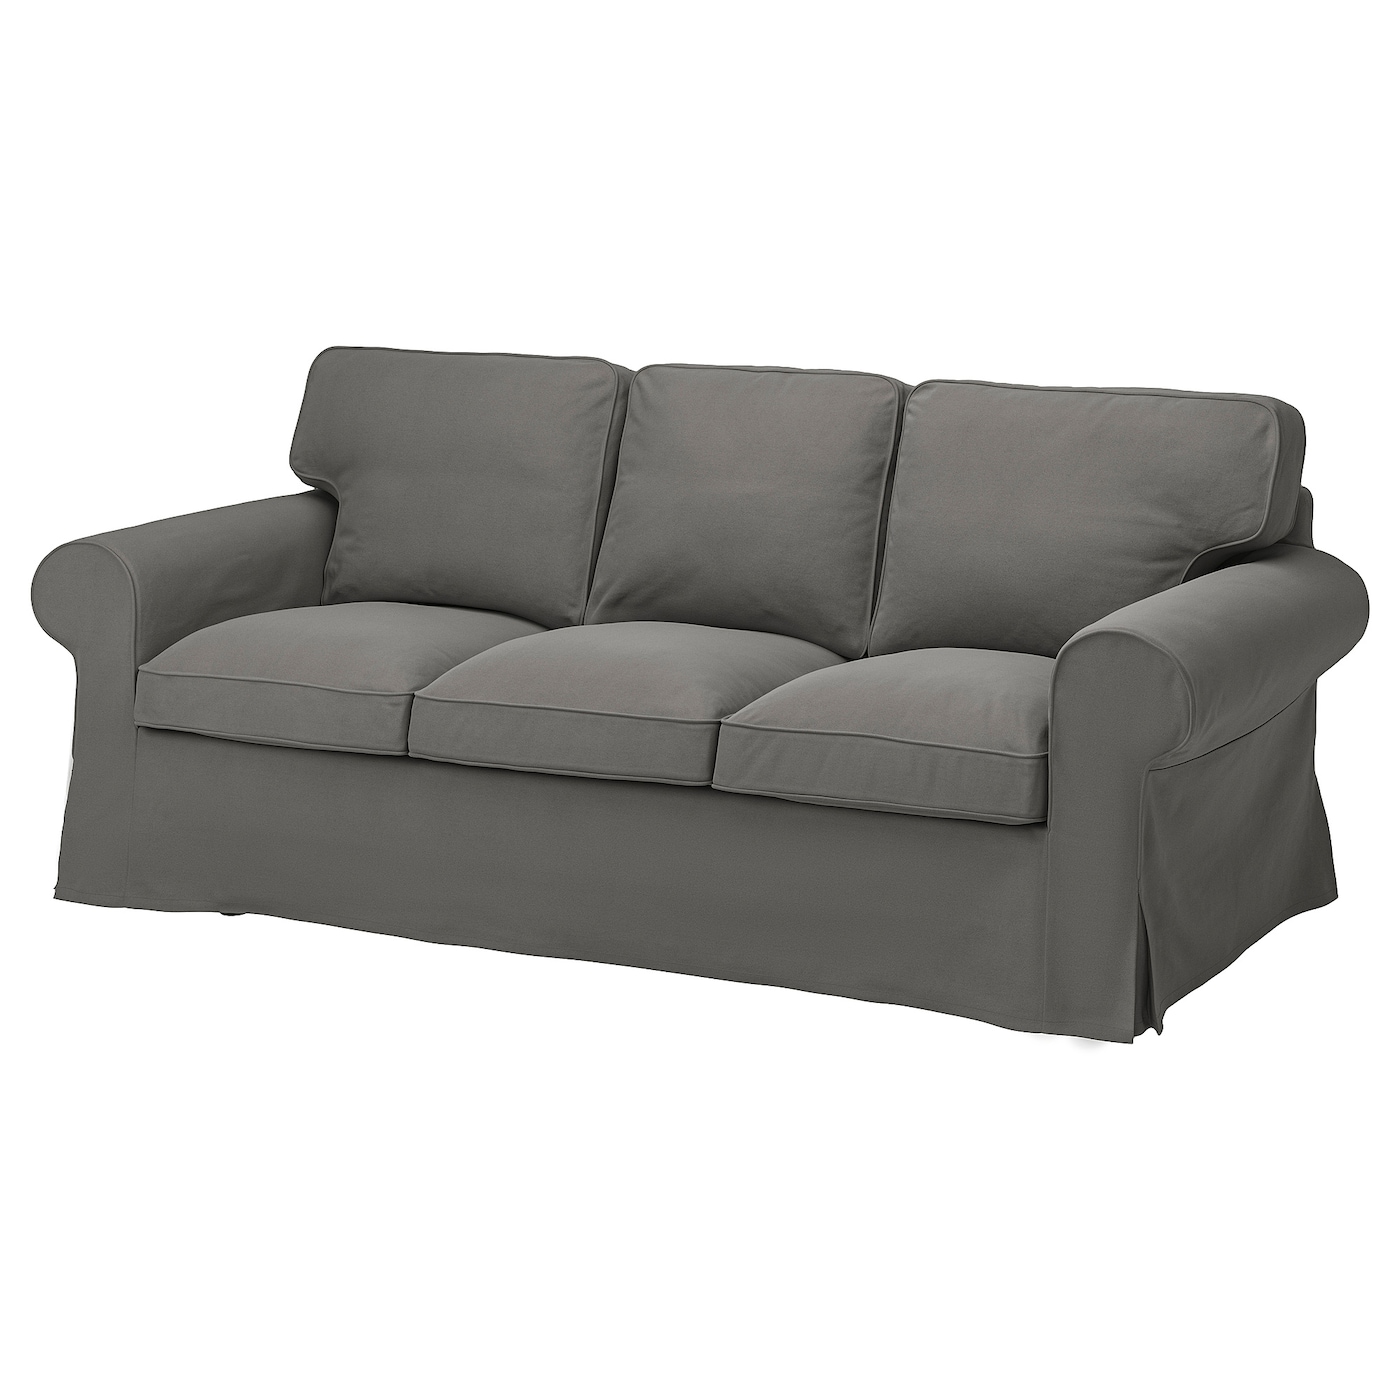 ЭКТОРП 3-местный диван, Хакебо темно-серый EKTORP IKEA чехол на 2 местный угловой диван ikea ektorp светло серый